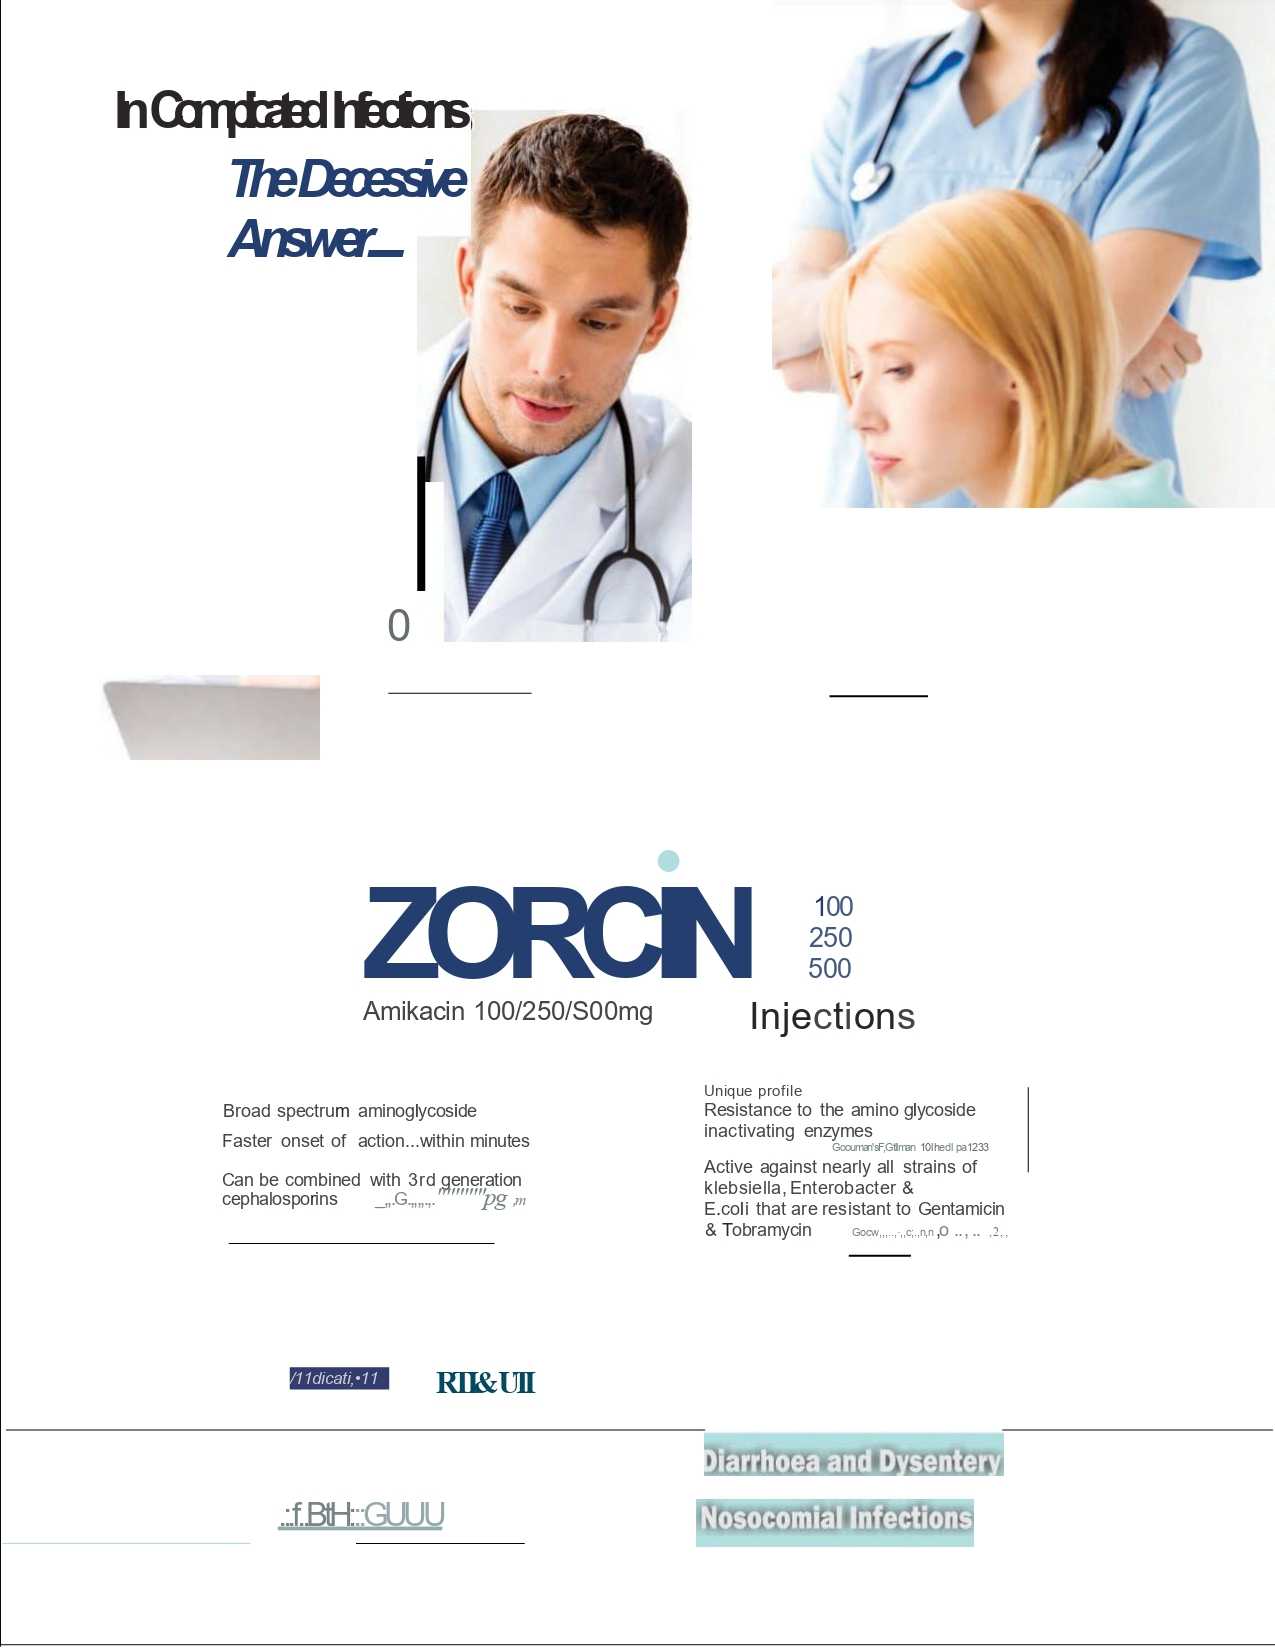 Zorcin-500